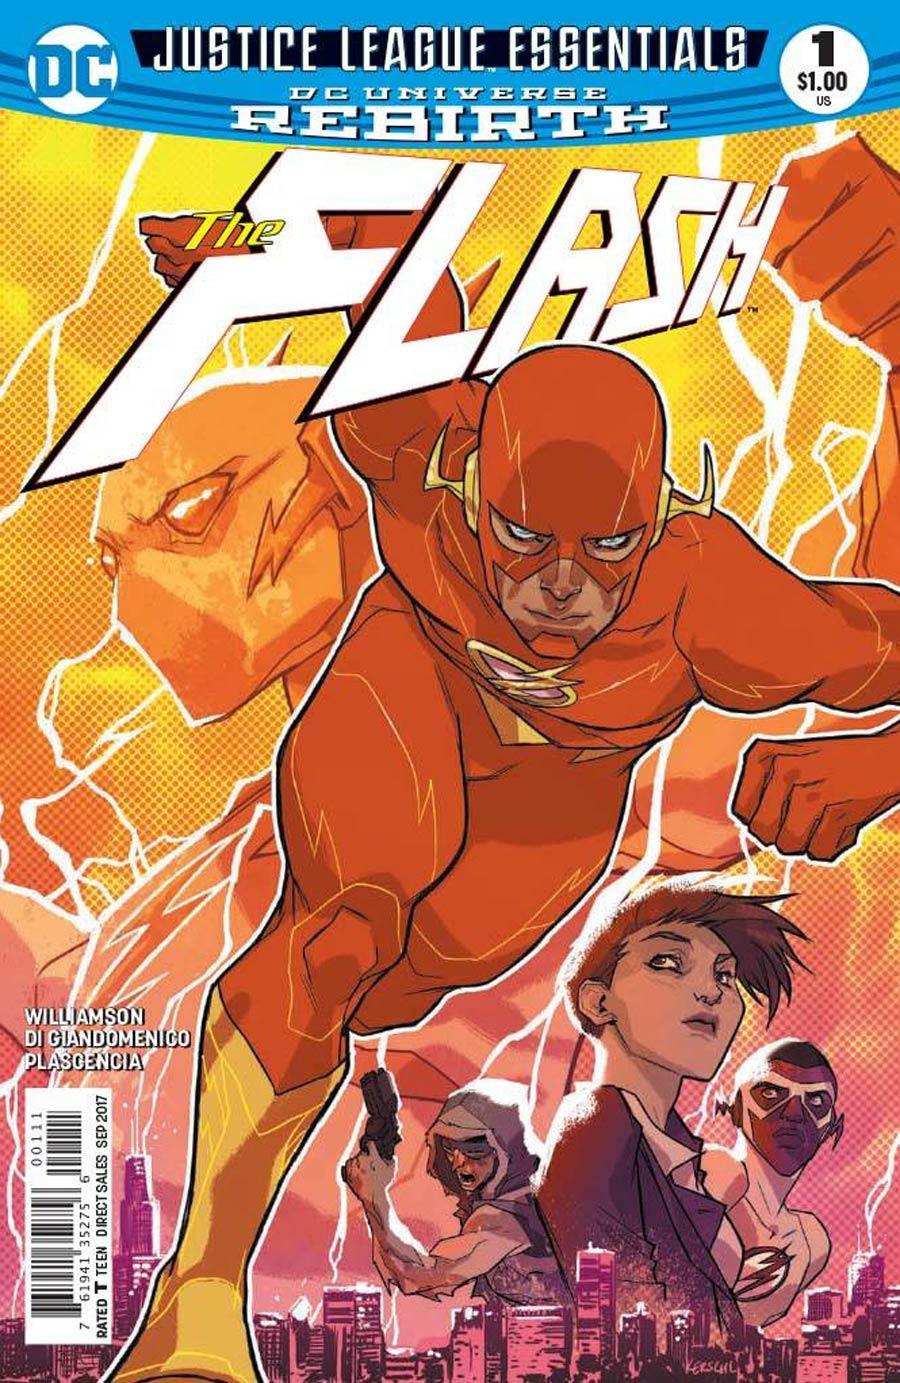 DC Justice League Essentials Flash Vol. 1 #1